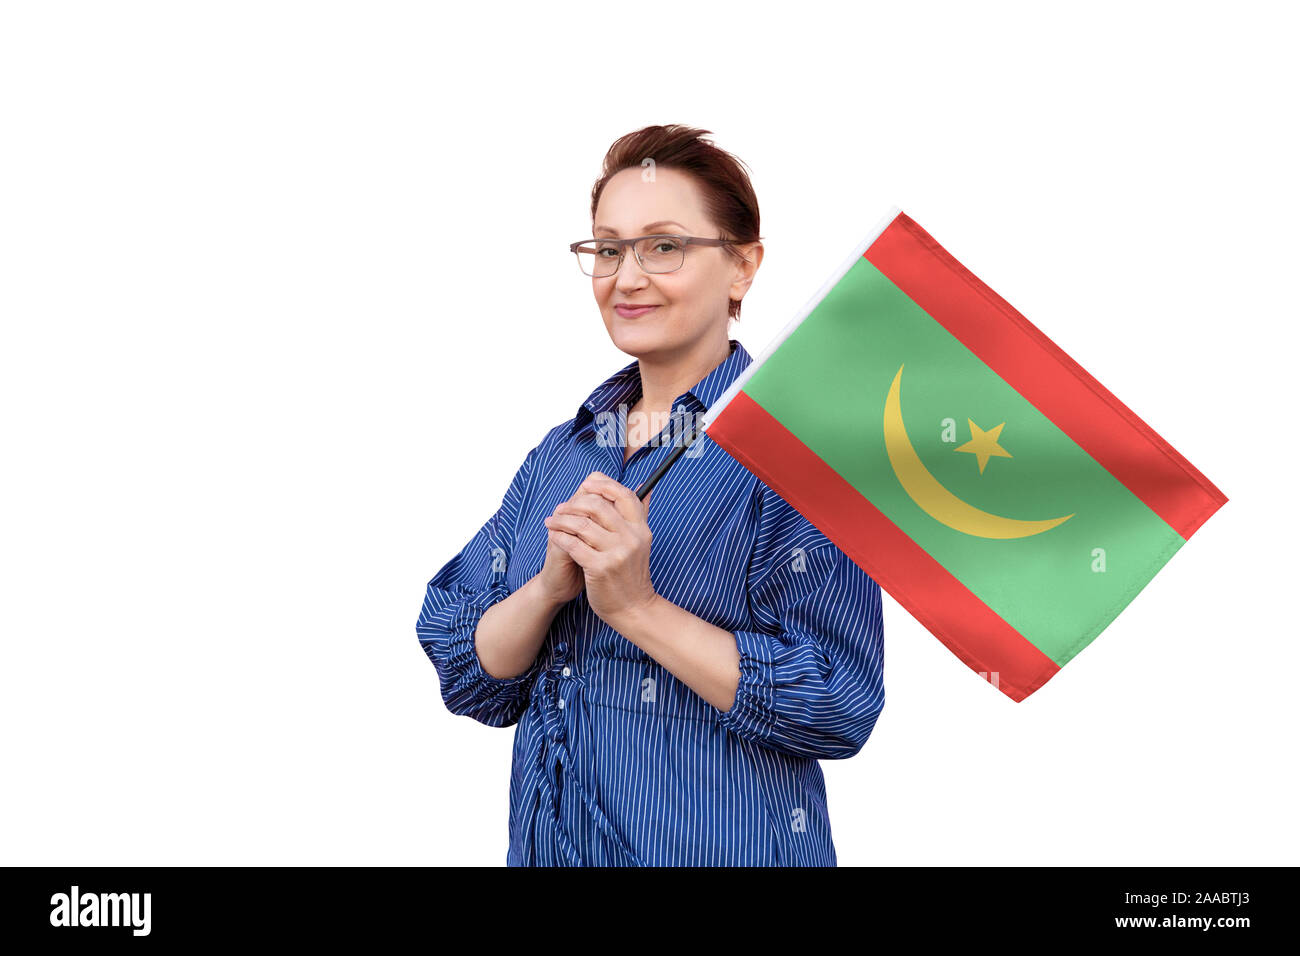 Mauritania flag. Woman holding Mauritanian flag. Nice portrait of middle aged lady 40 50 years old holding a large flag isolated on white background. Stock Photo